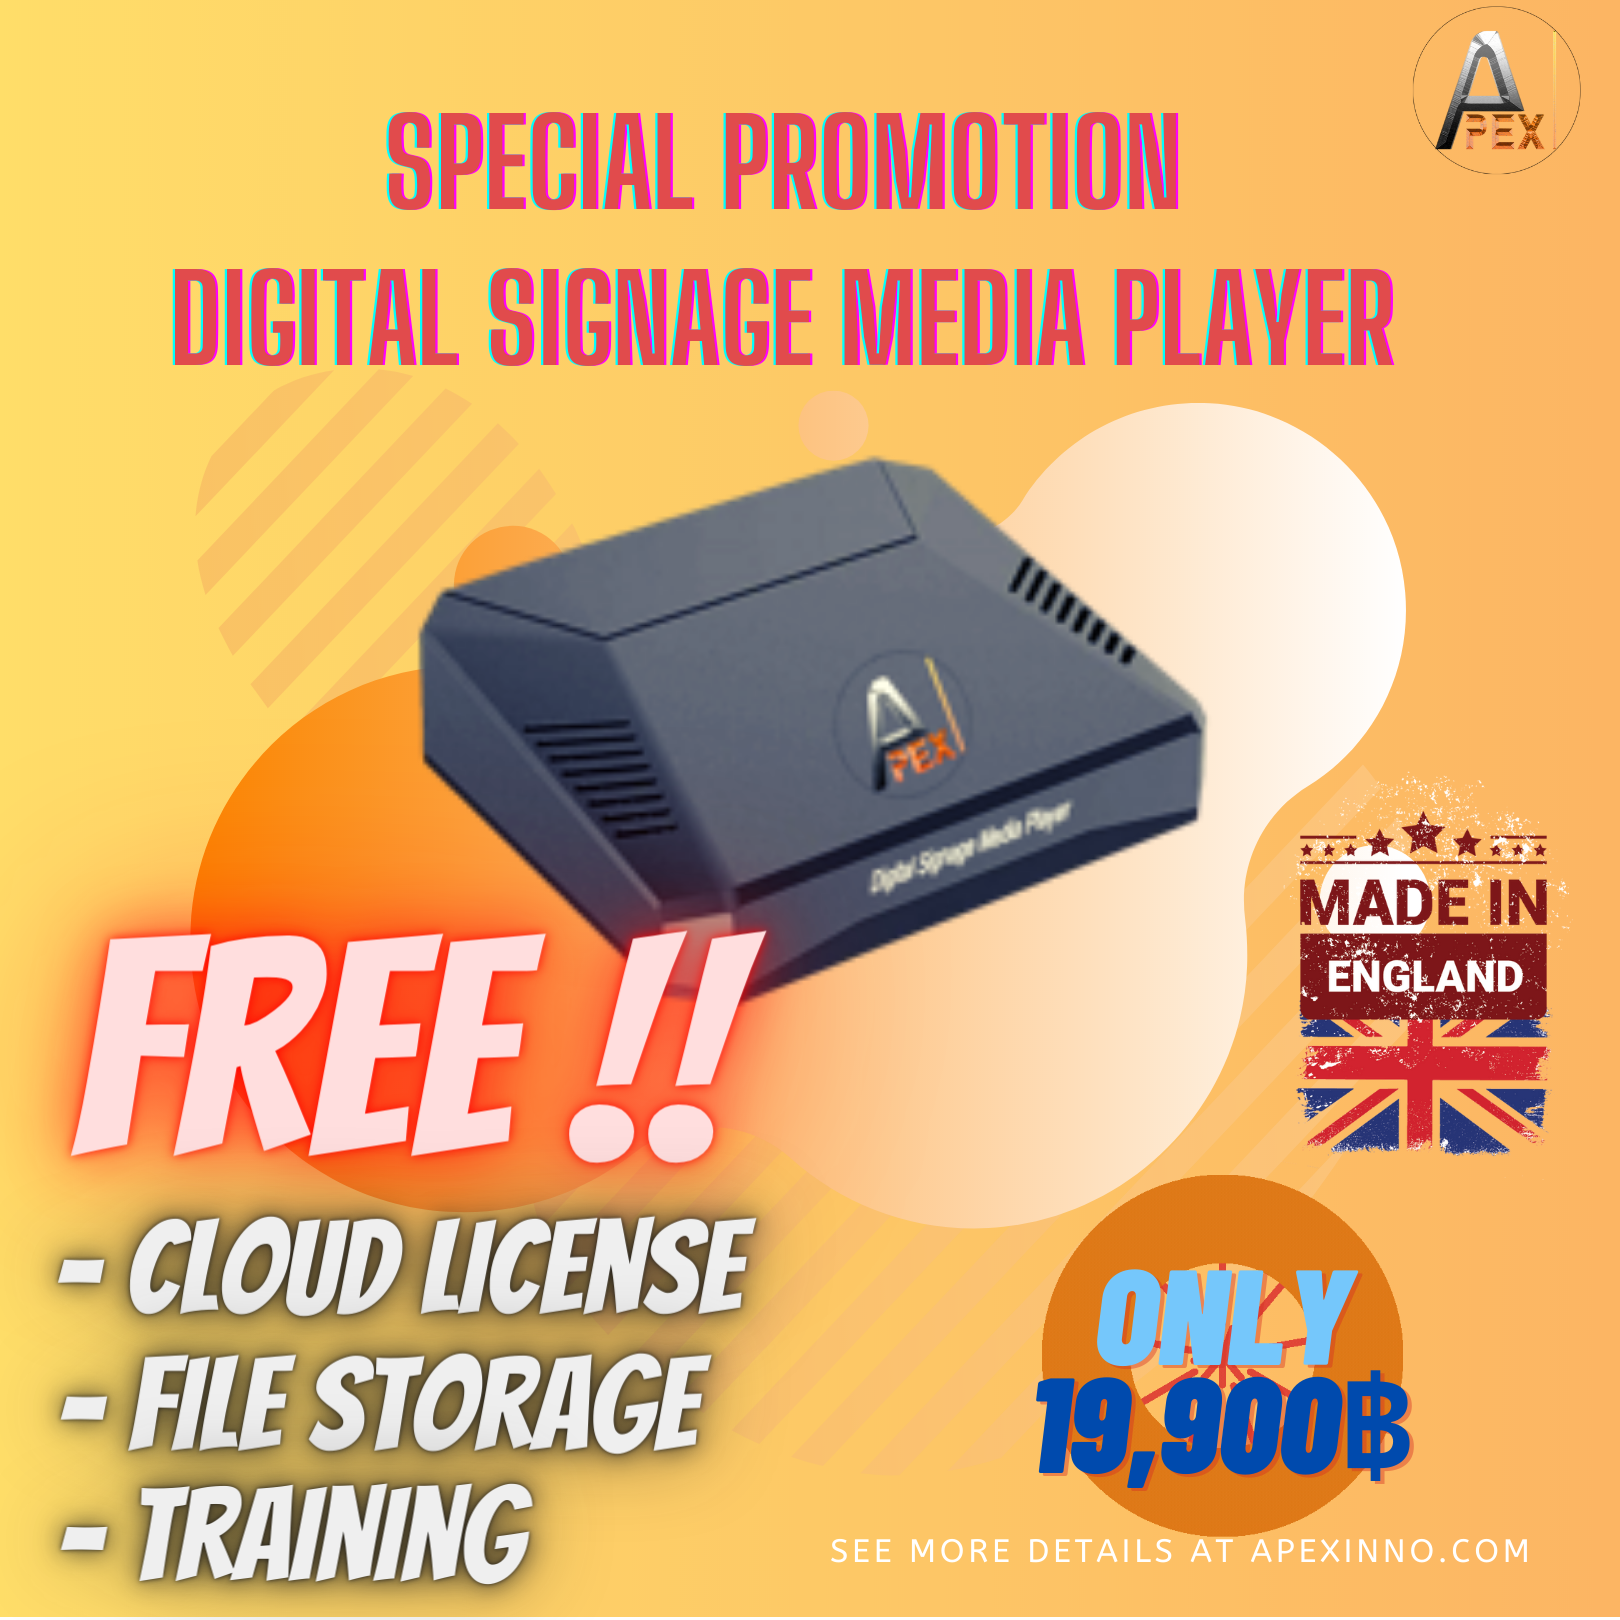 Digital Signage Media Player อัปโฆษณาหรือสื่อต่างๆ ฟรีCloud License ตลอดอายุการใช้งาน รองรับไฟล์ทุกประเภท